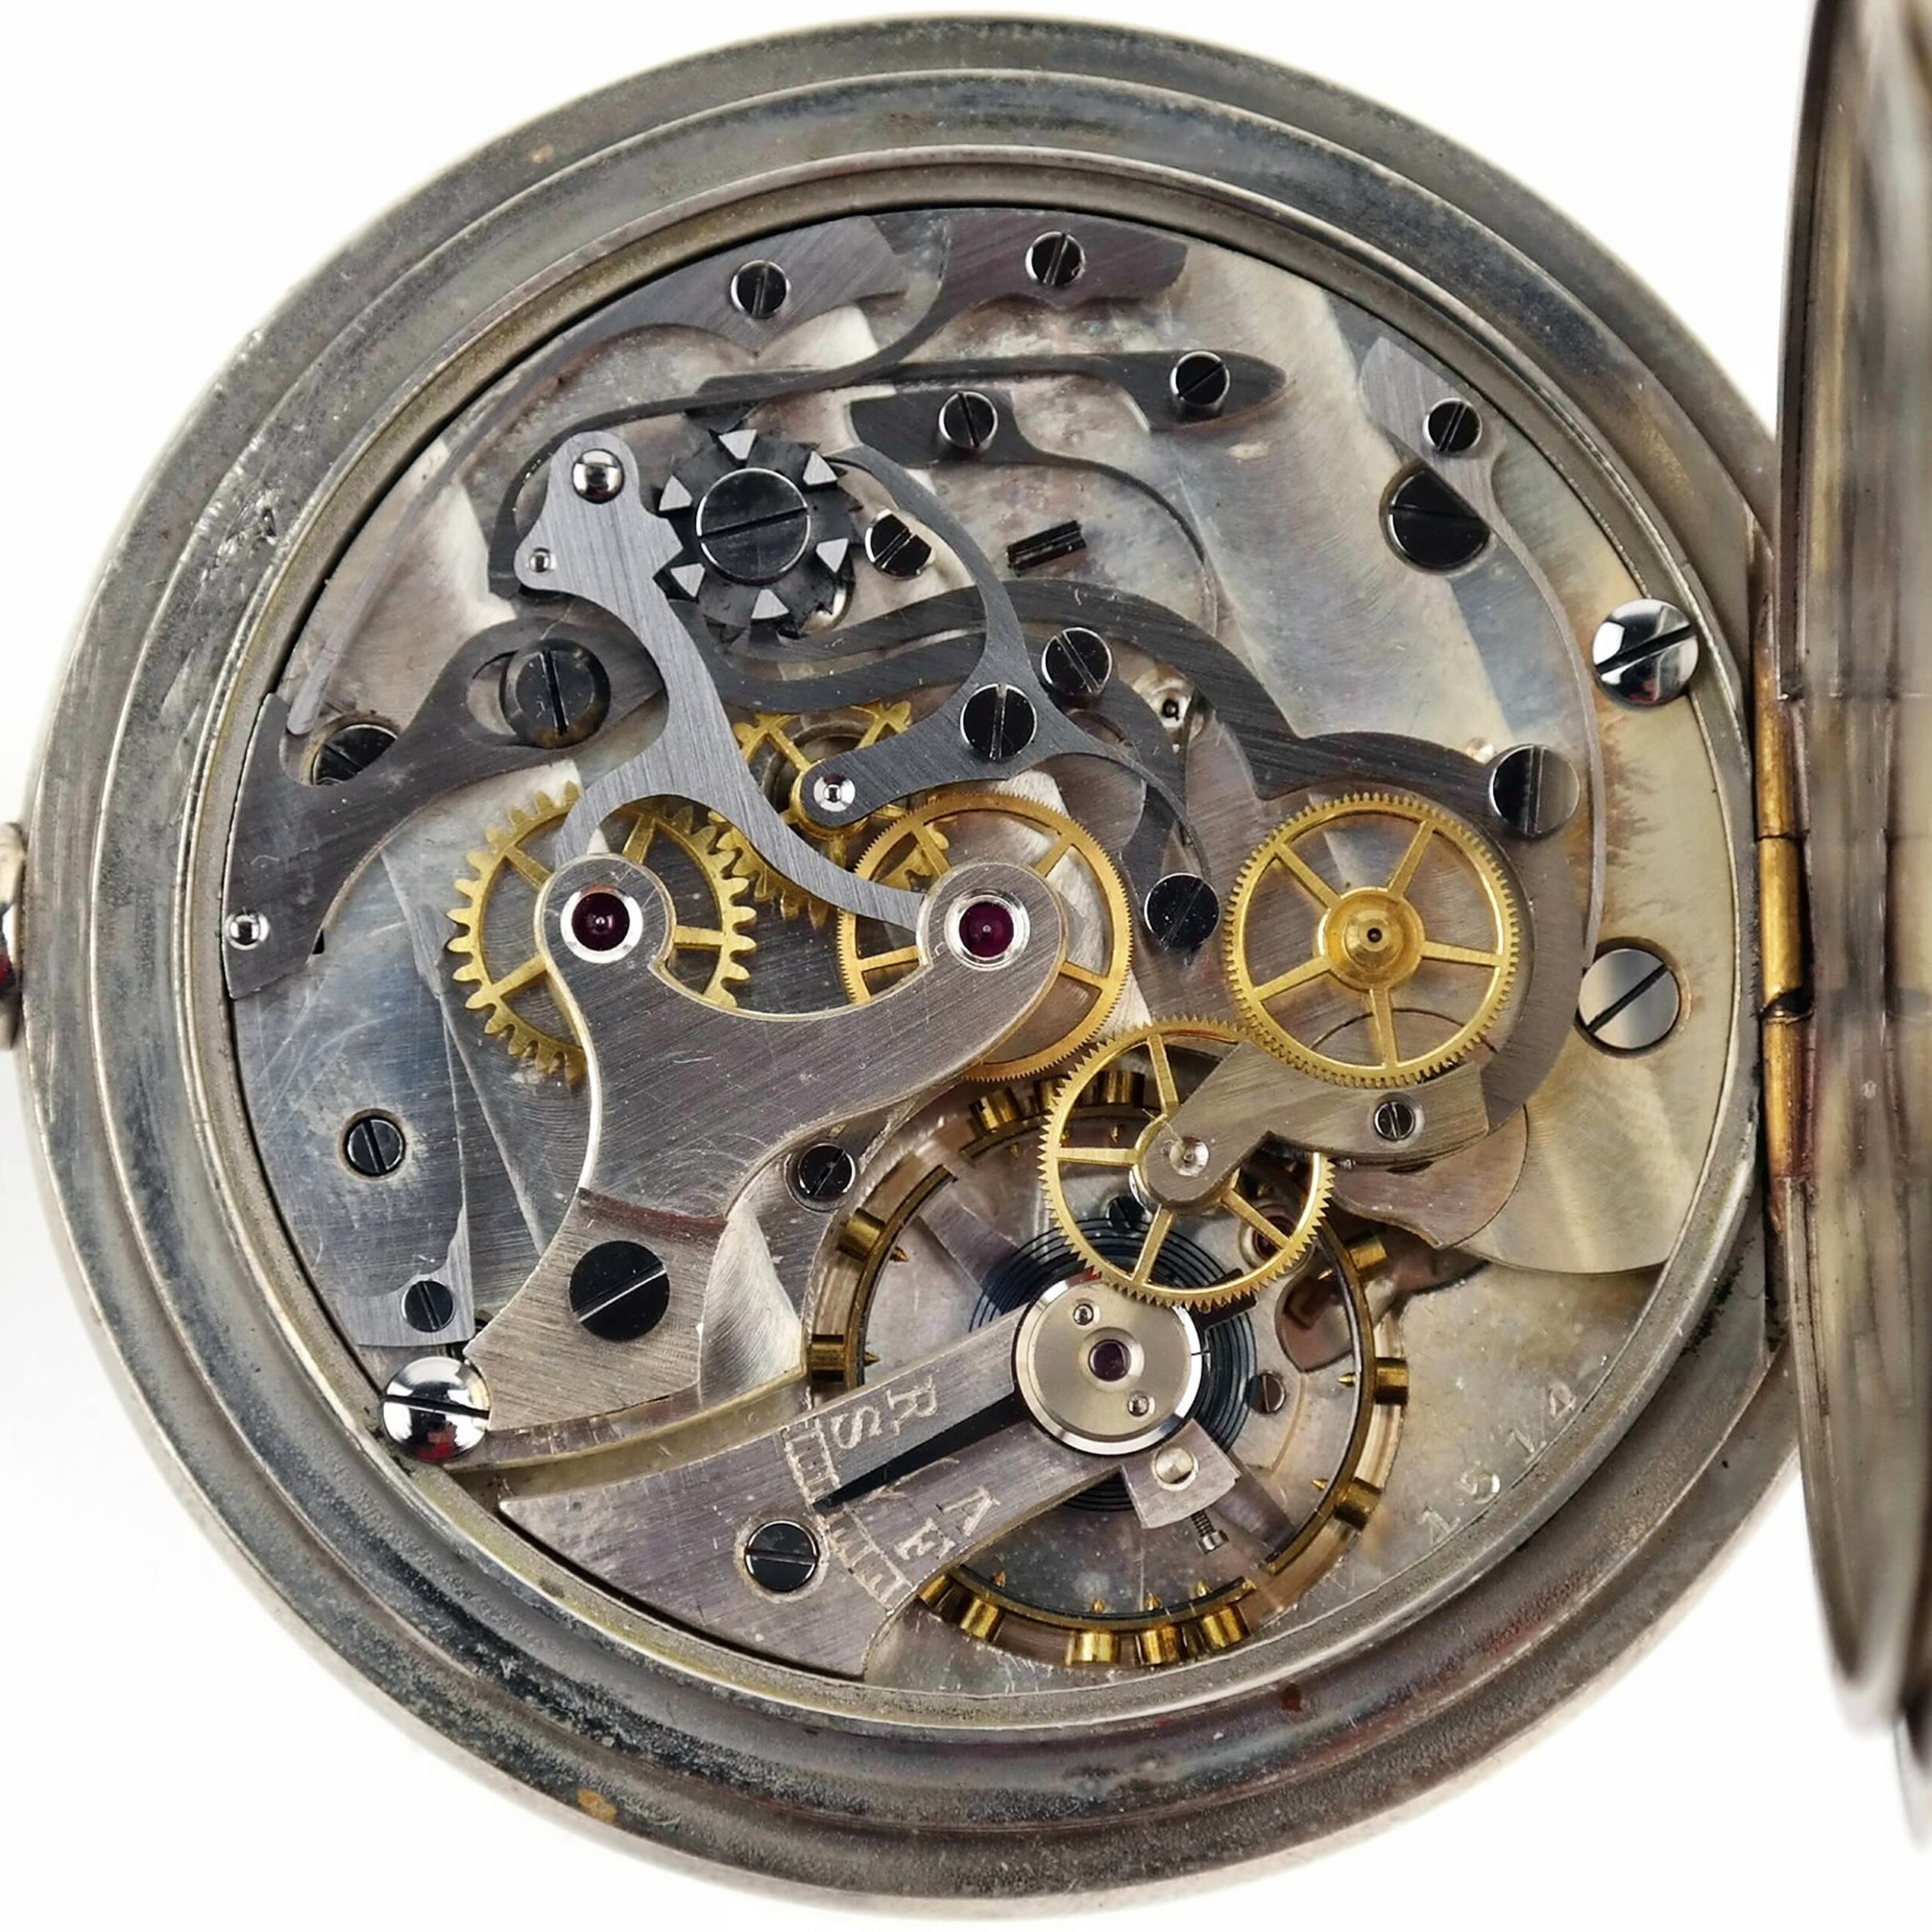 NATIONAL WATCH - Single Pusher Column Wheel Chronograph Vintage StopWatch